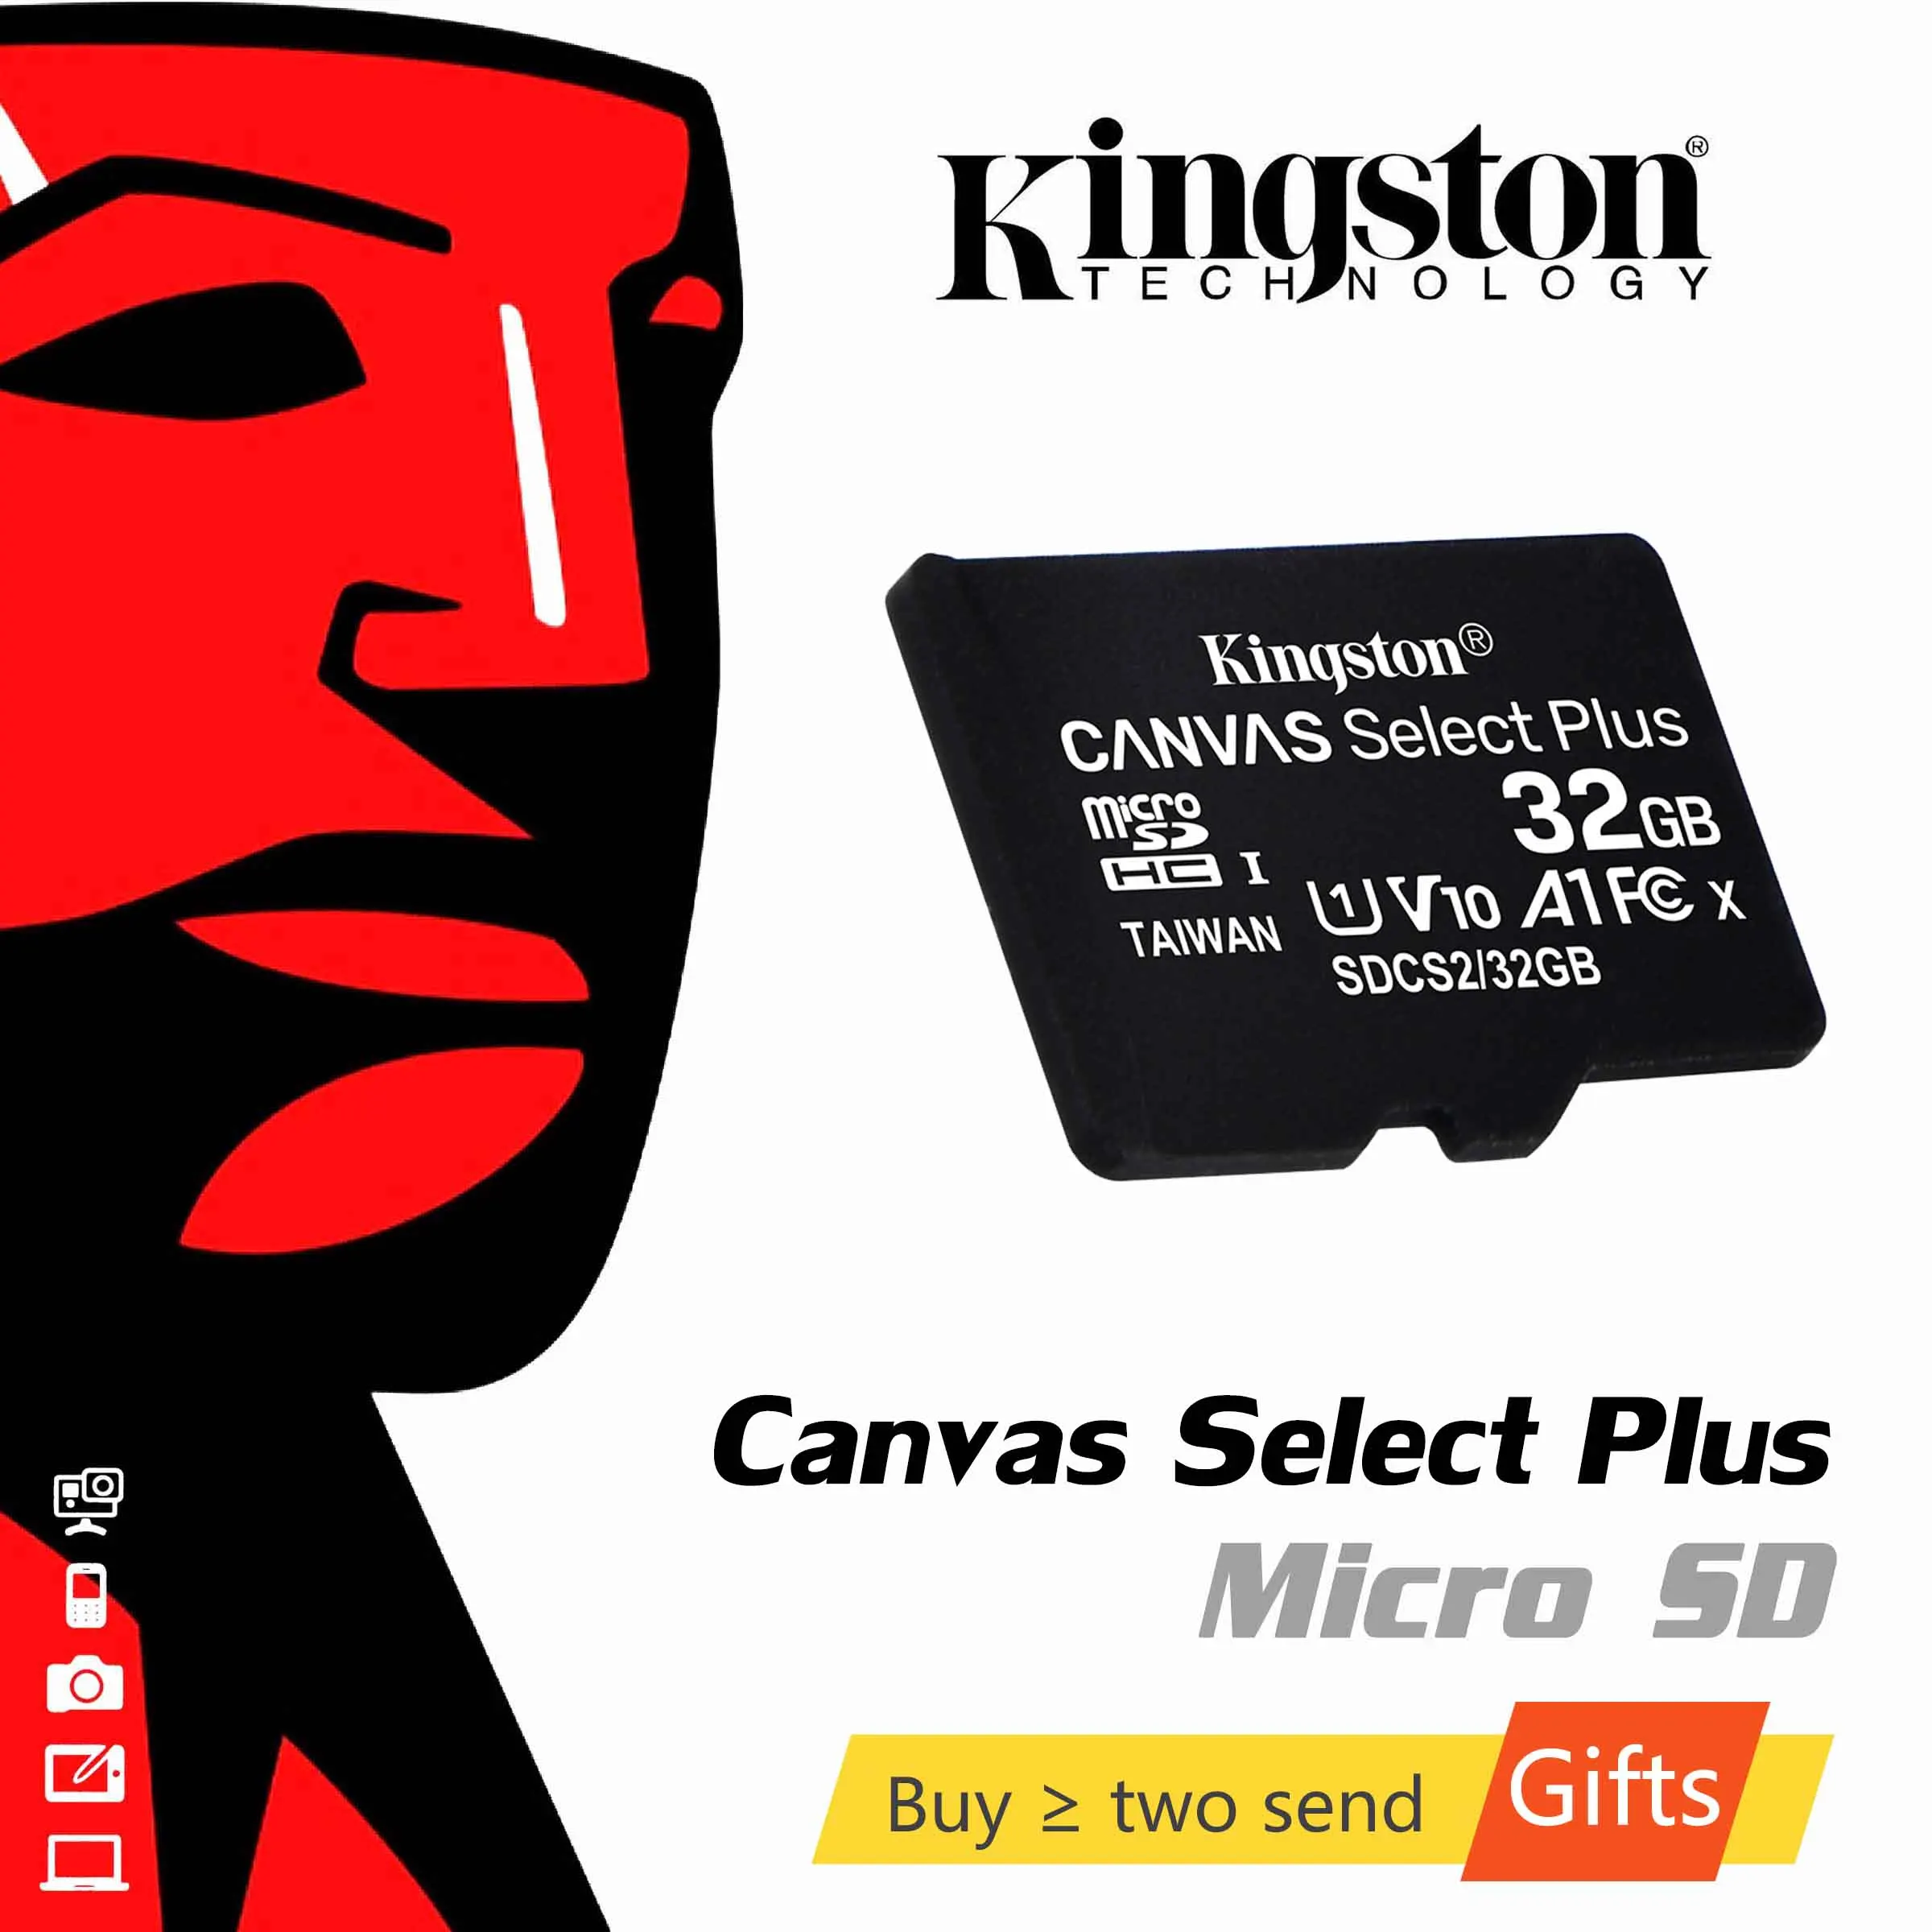 

Kingston Micro SD 16gb 32gb 64gb 128gb 256gb 512gb Flash Memory Card Canvas Select Plus Microsd SDHC/SDXC Class 10 TF Carte